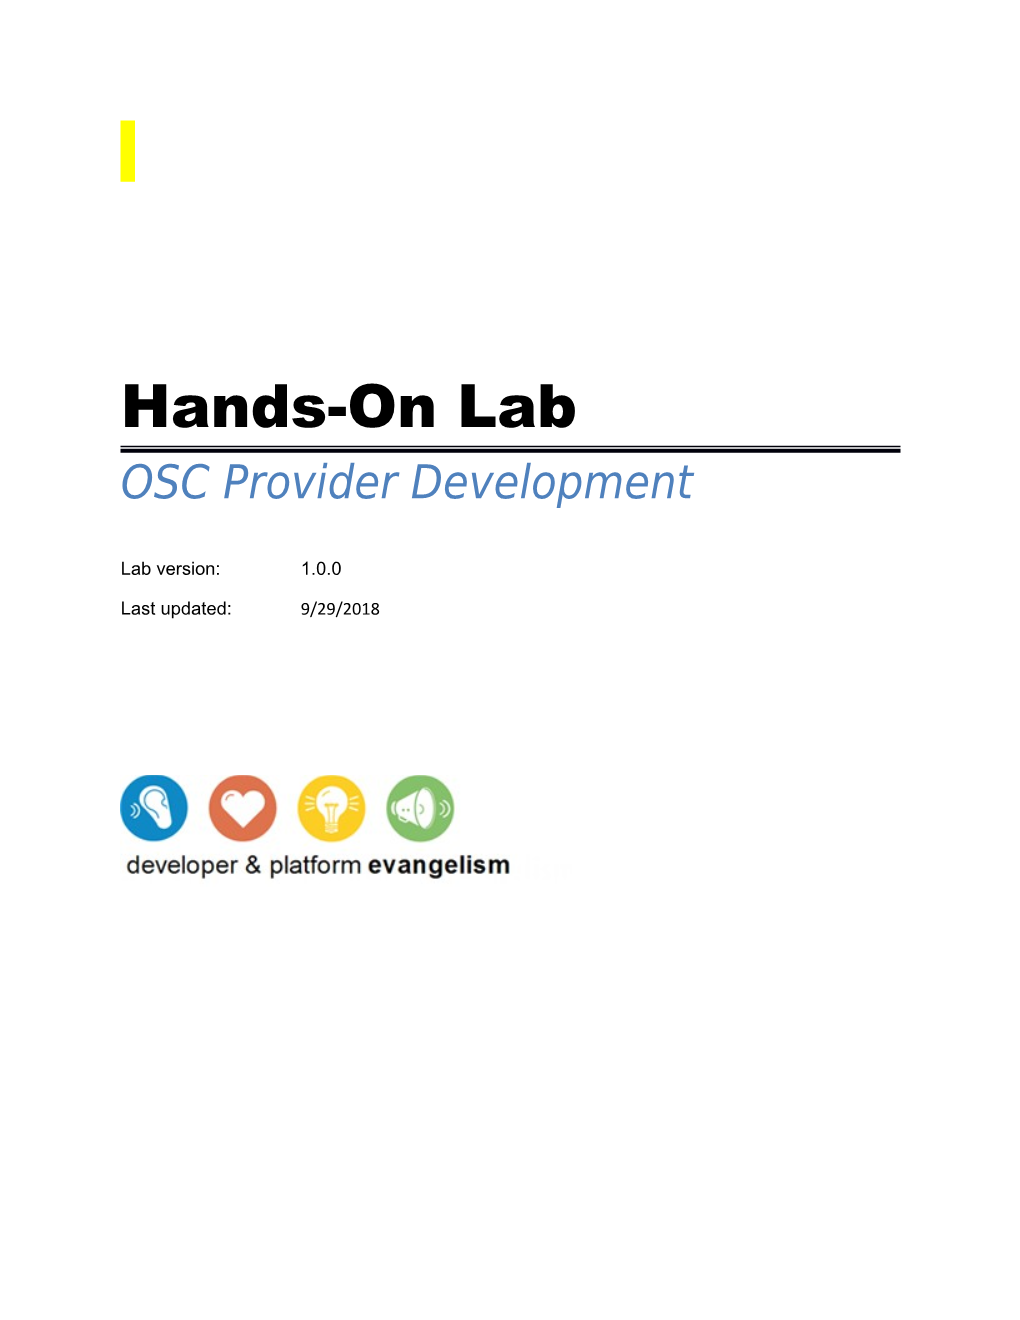 OSC Provider Development